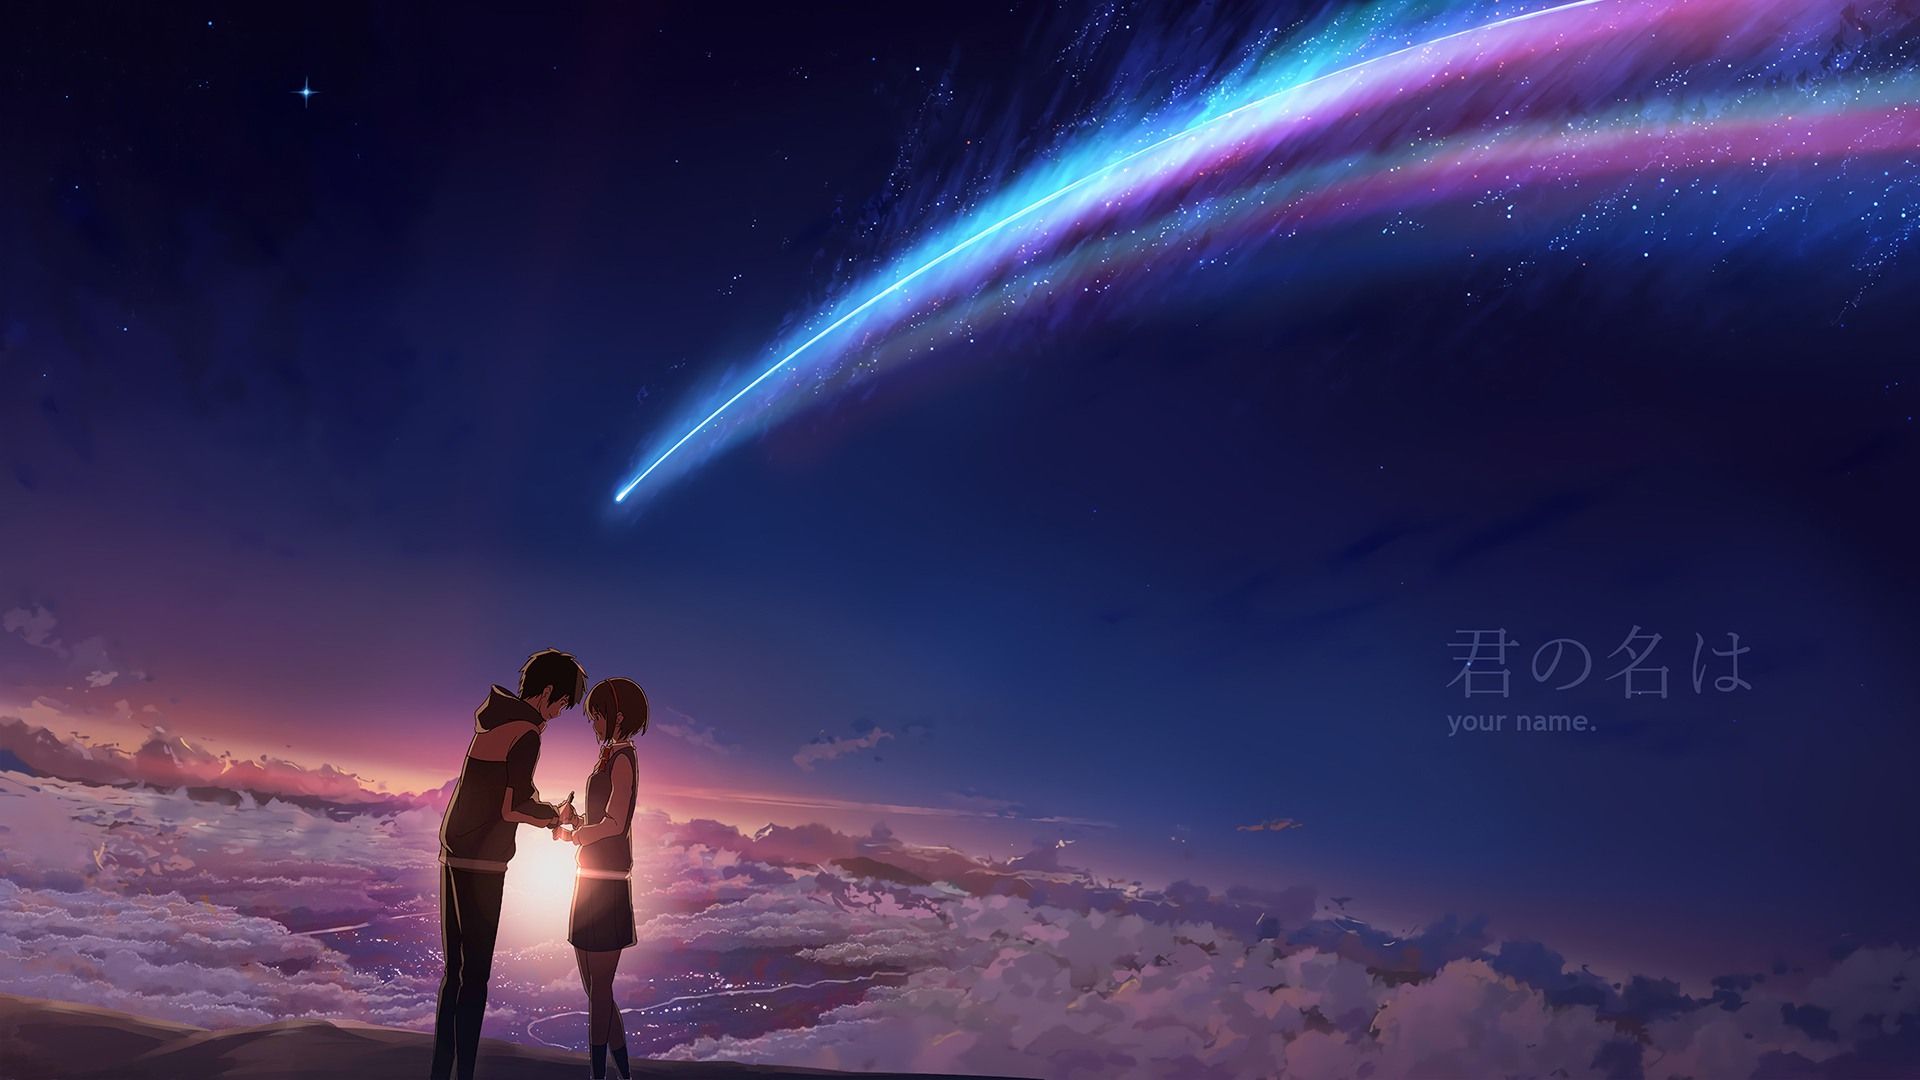 Taki and Mitsuha Your Name. Anime Sunrise Scenery Night Sky Comet